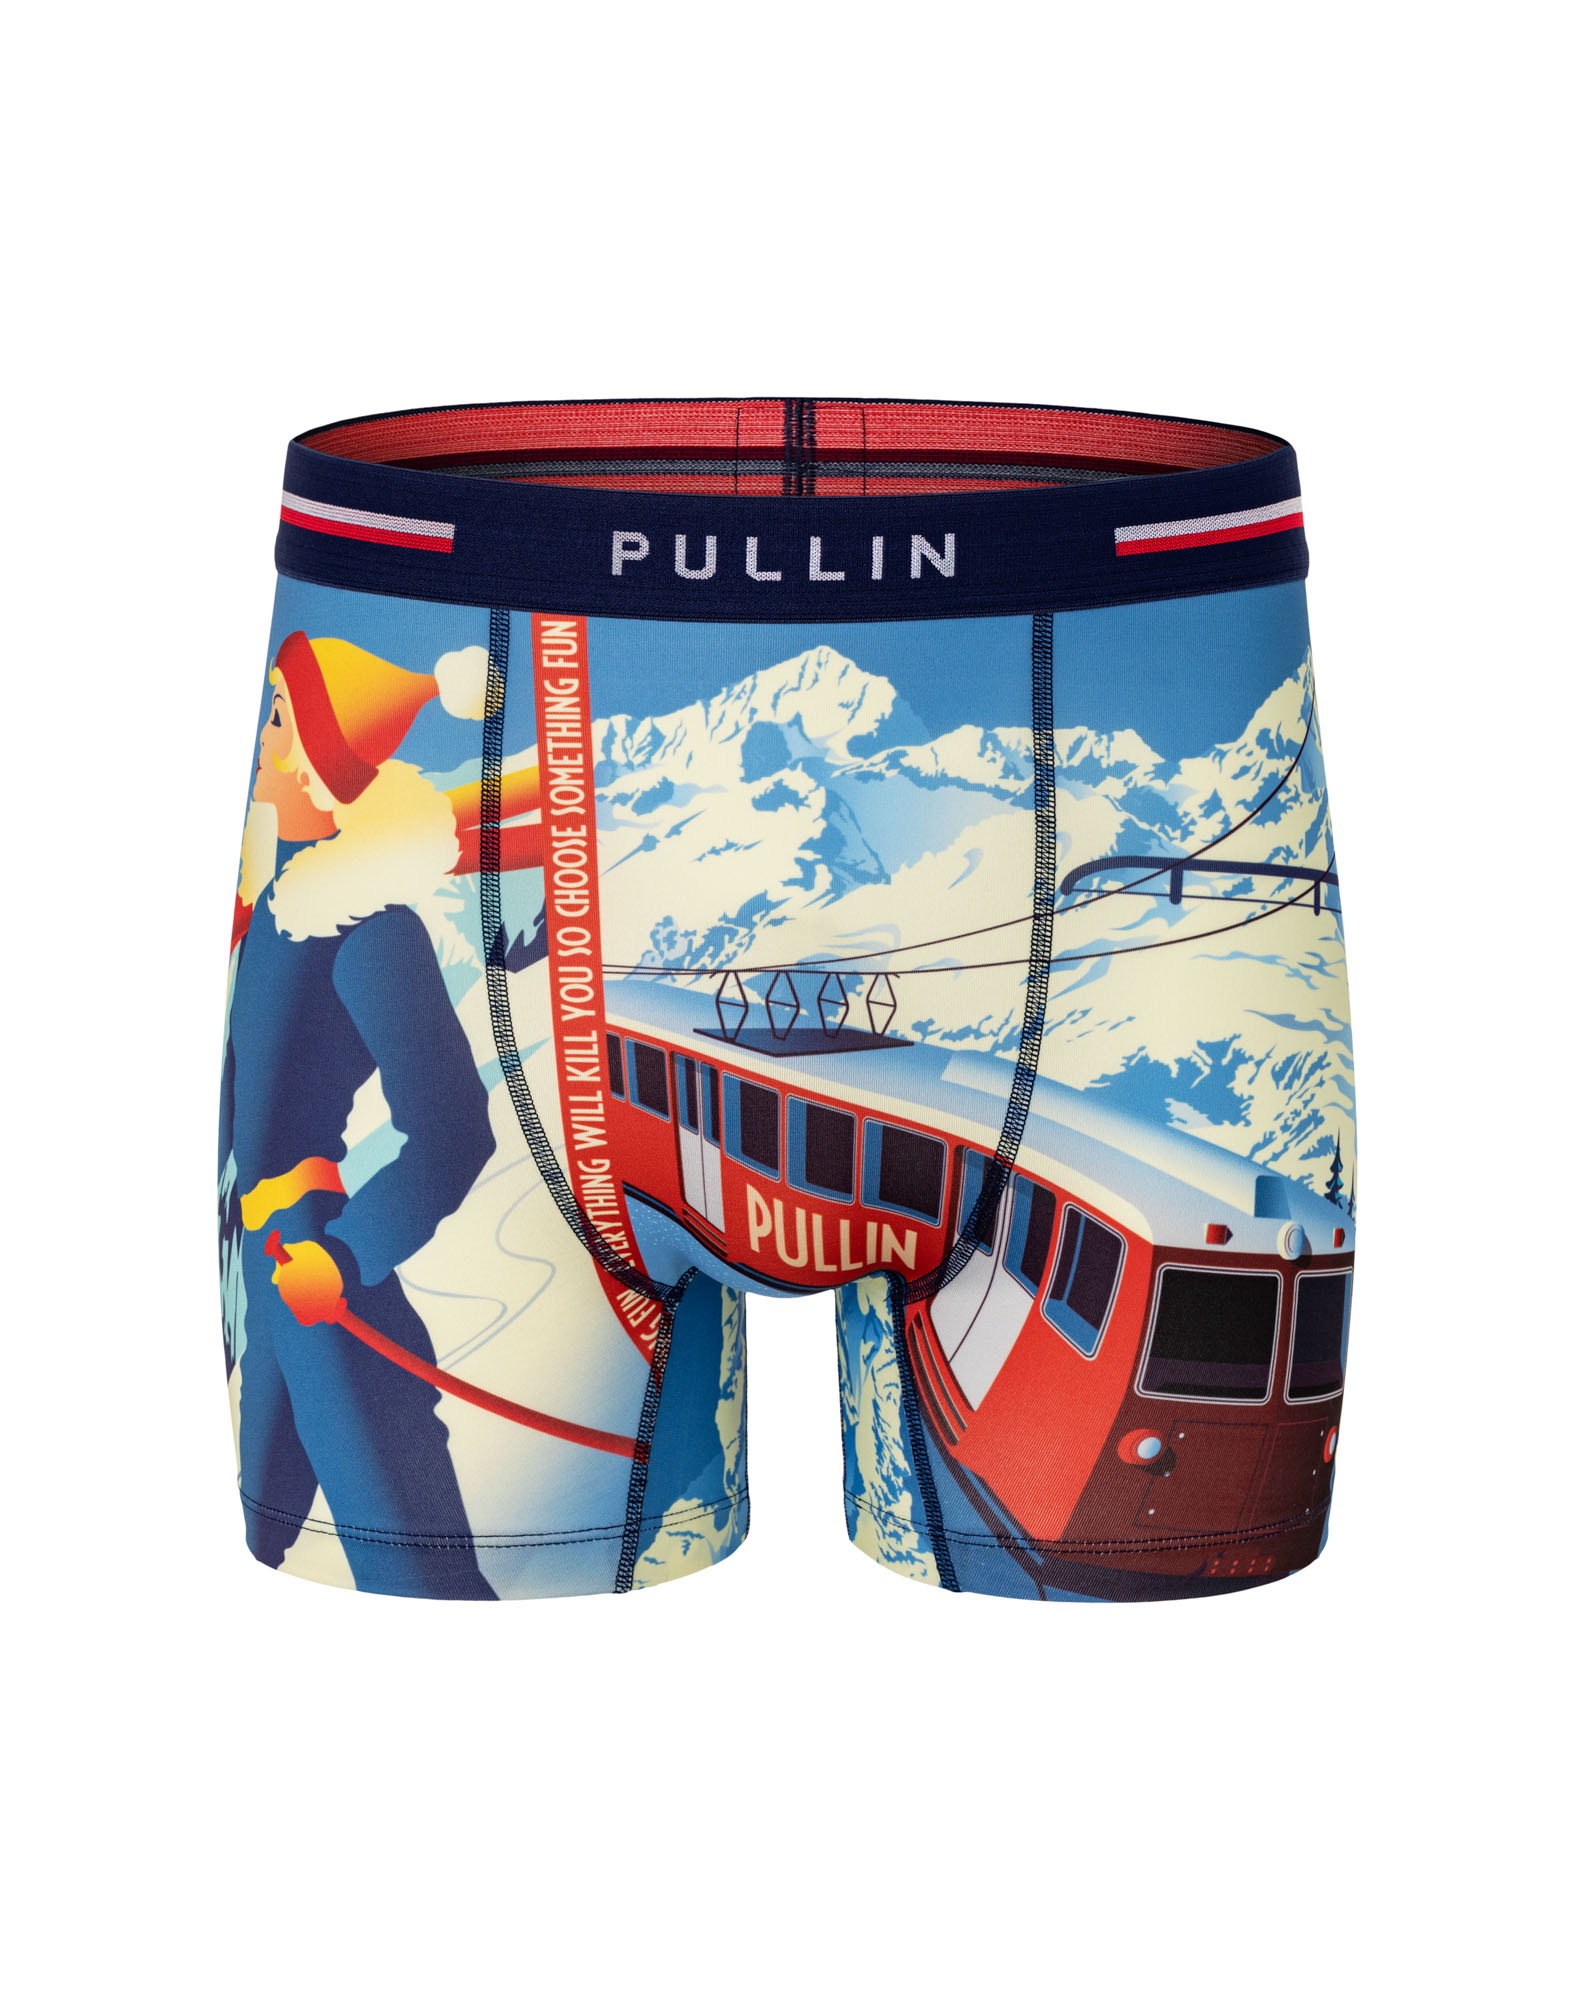 PULLIN Boxer underwear homme FA2 Baam Fashion PULL-IN